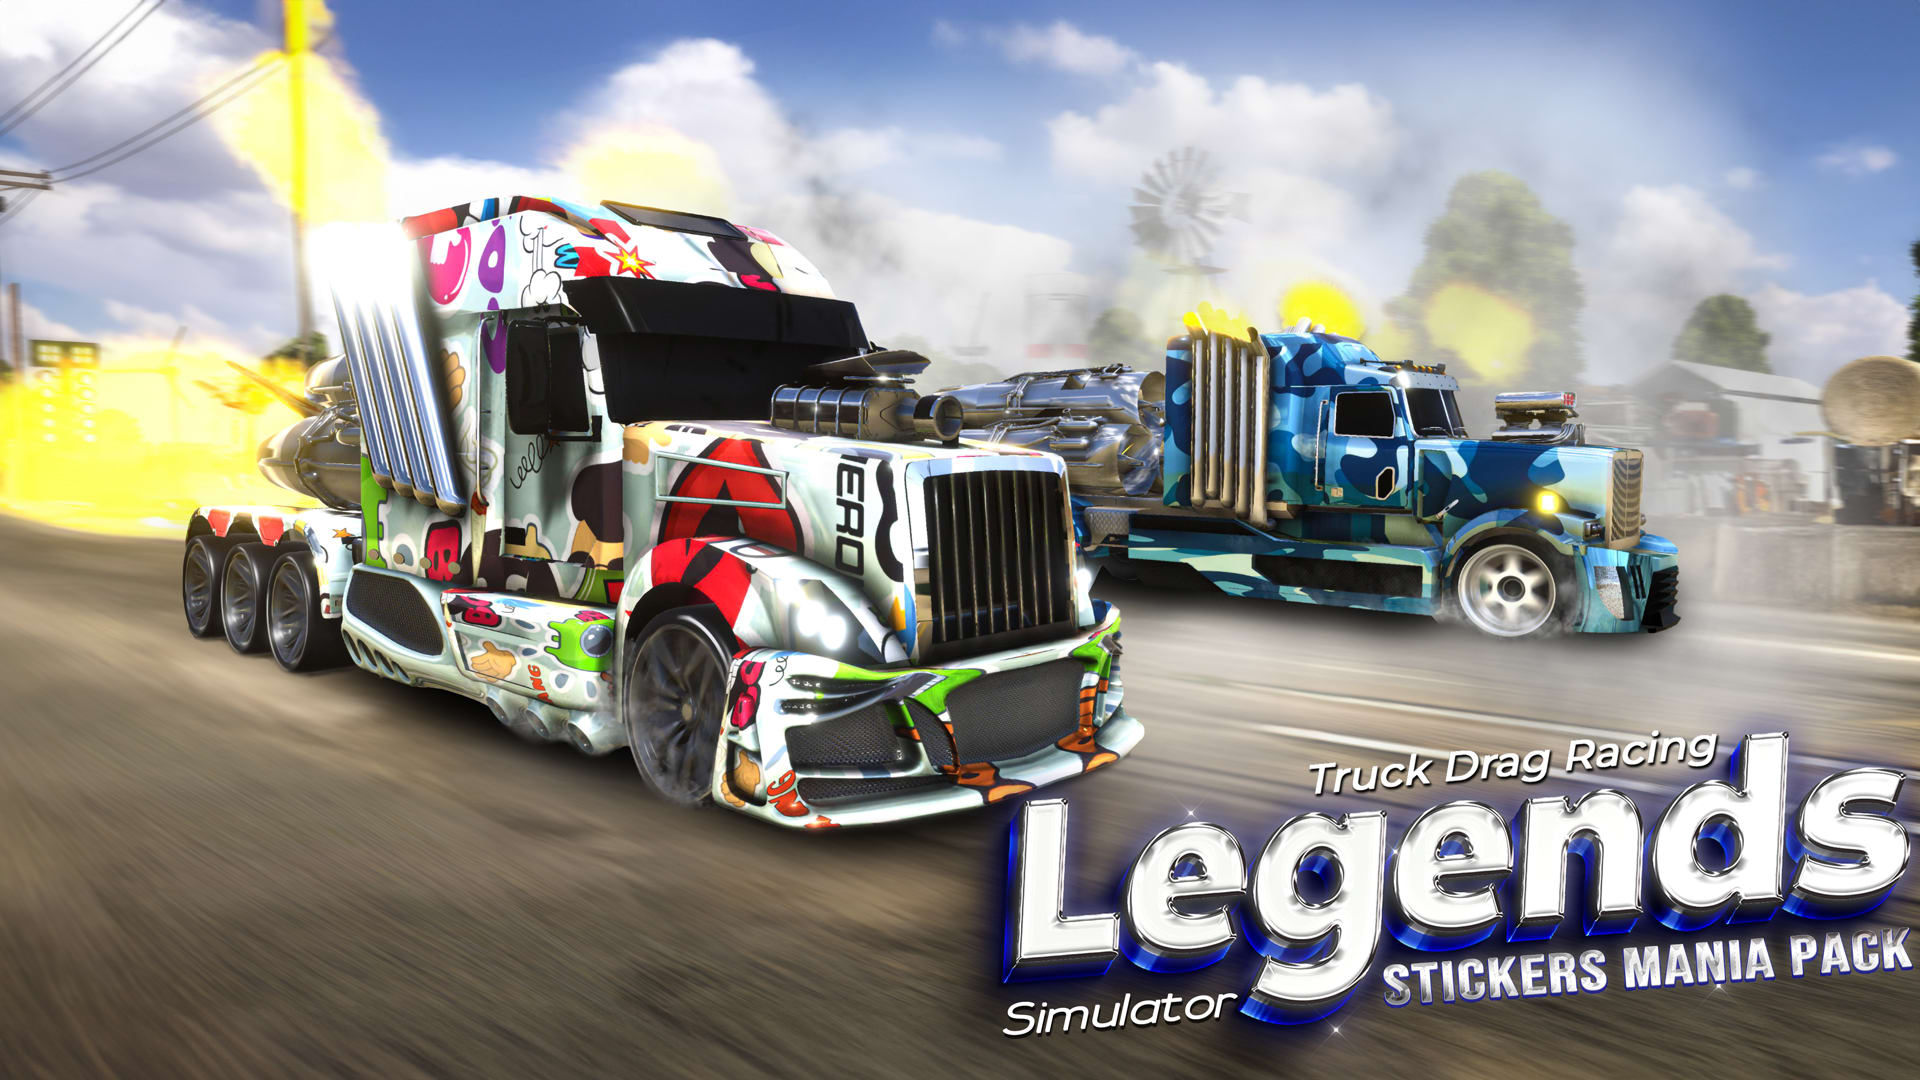 Truck Drag Racing Legends Simulator: Stickers Mania Pack